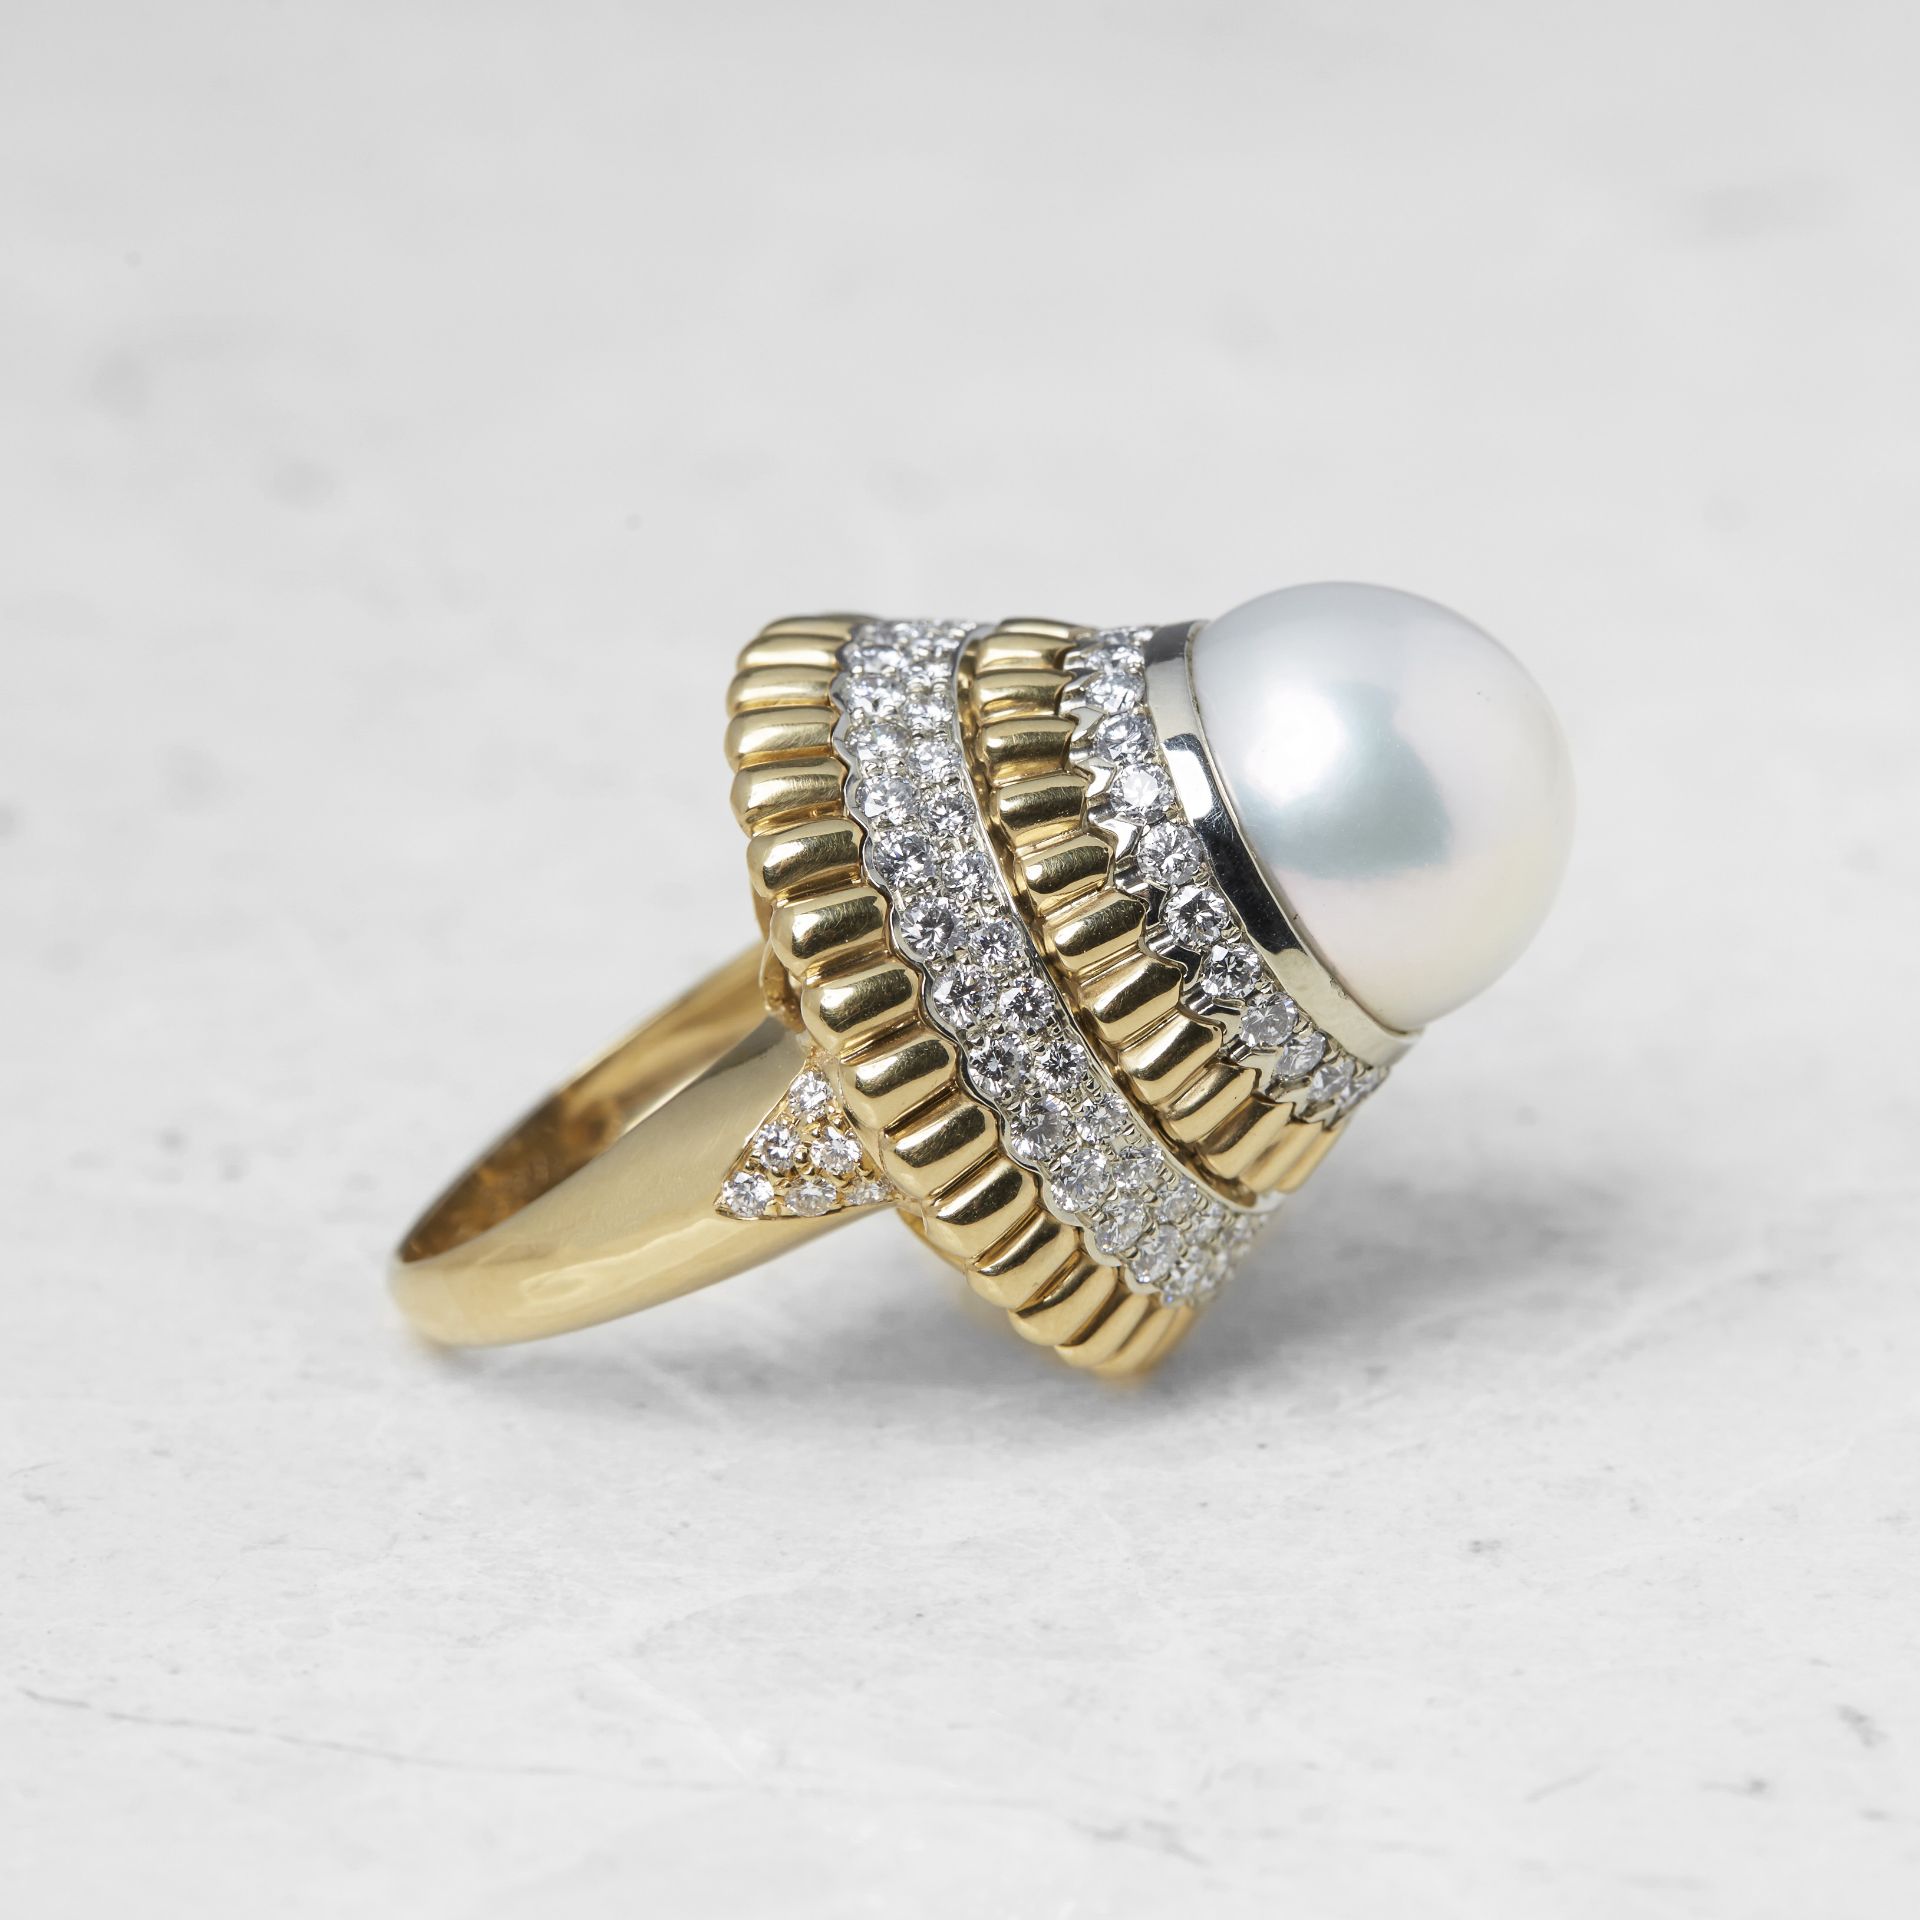 Van Cleef & Arpels 18k Yellow Gold Pearl & Diamond Ring - Image 13 of 28